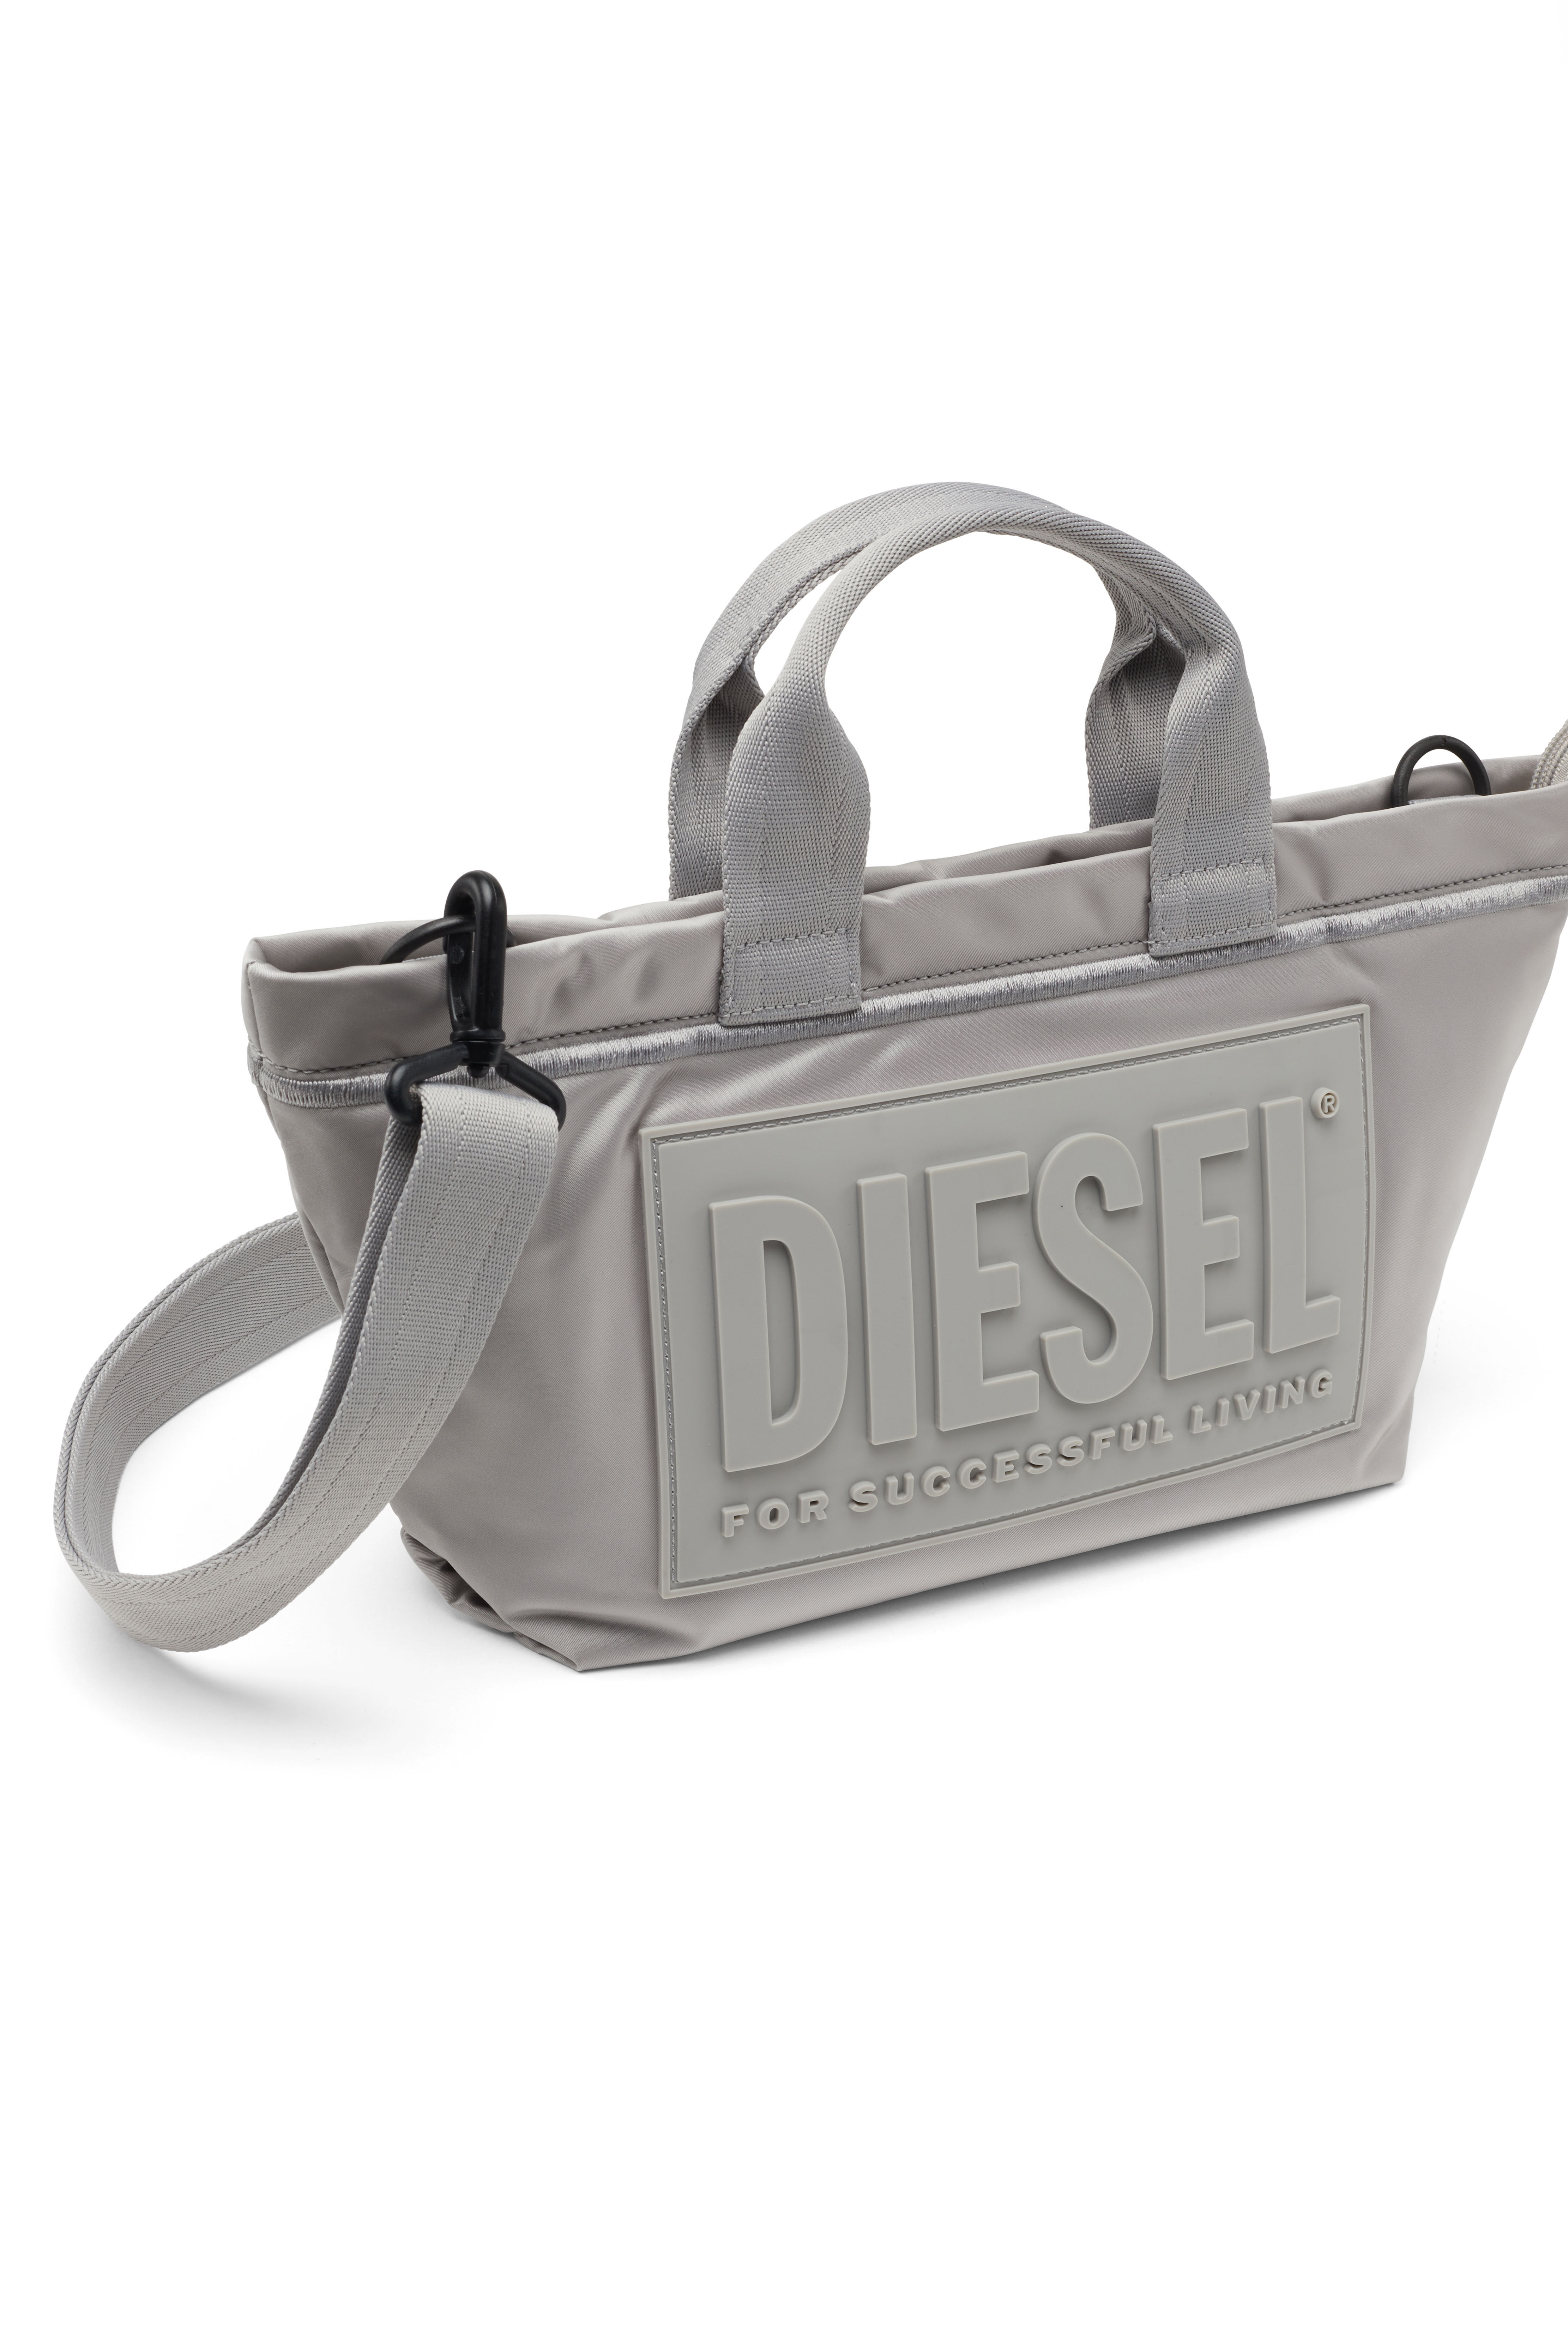 Diesel - HANDYE, グレー - Image 6